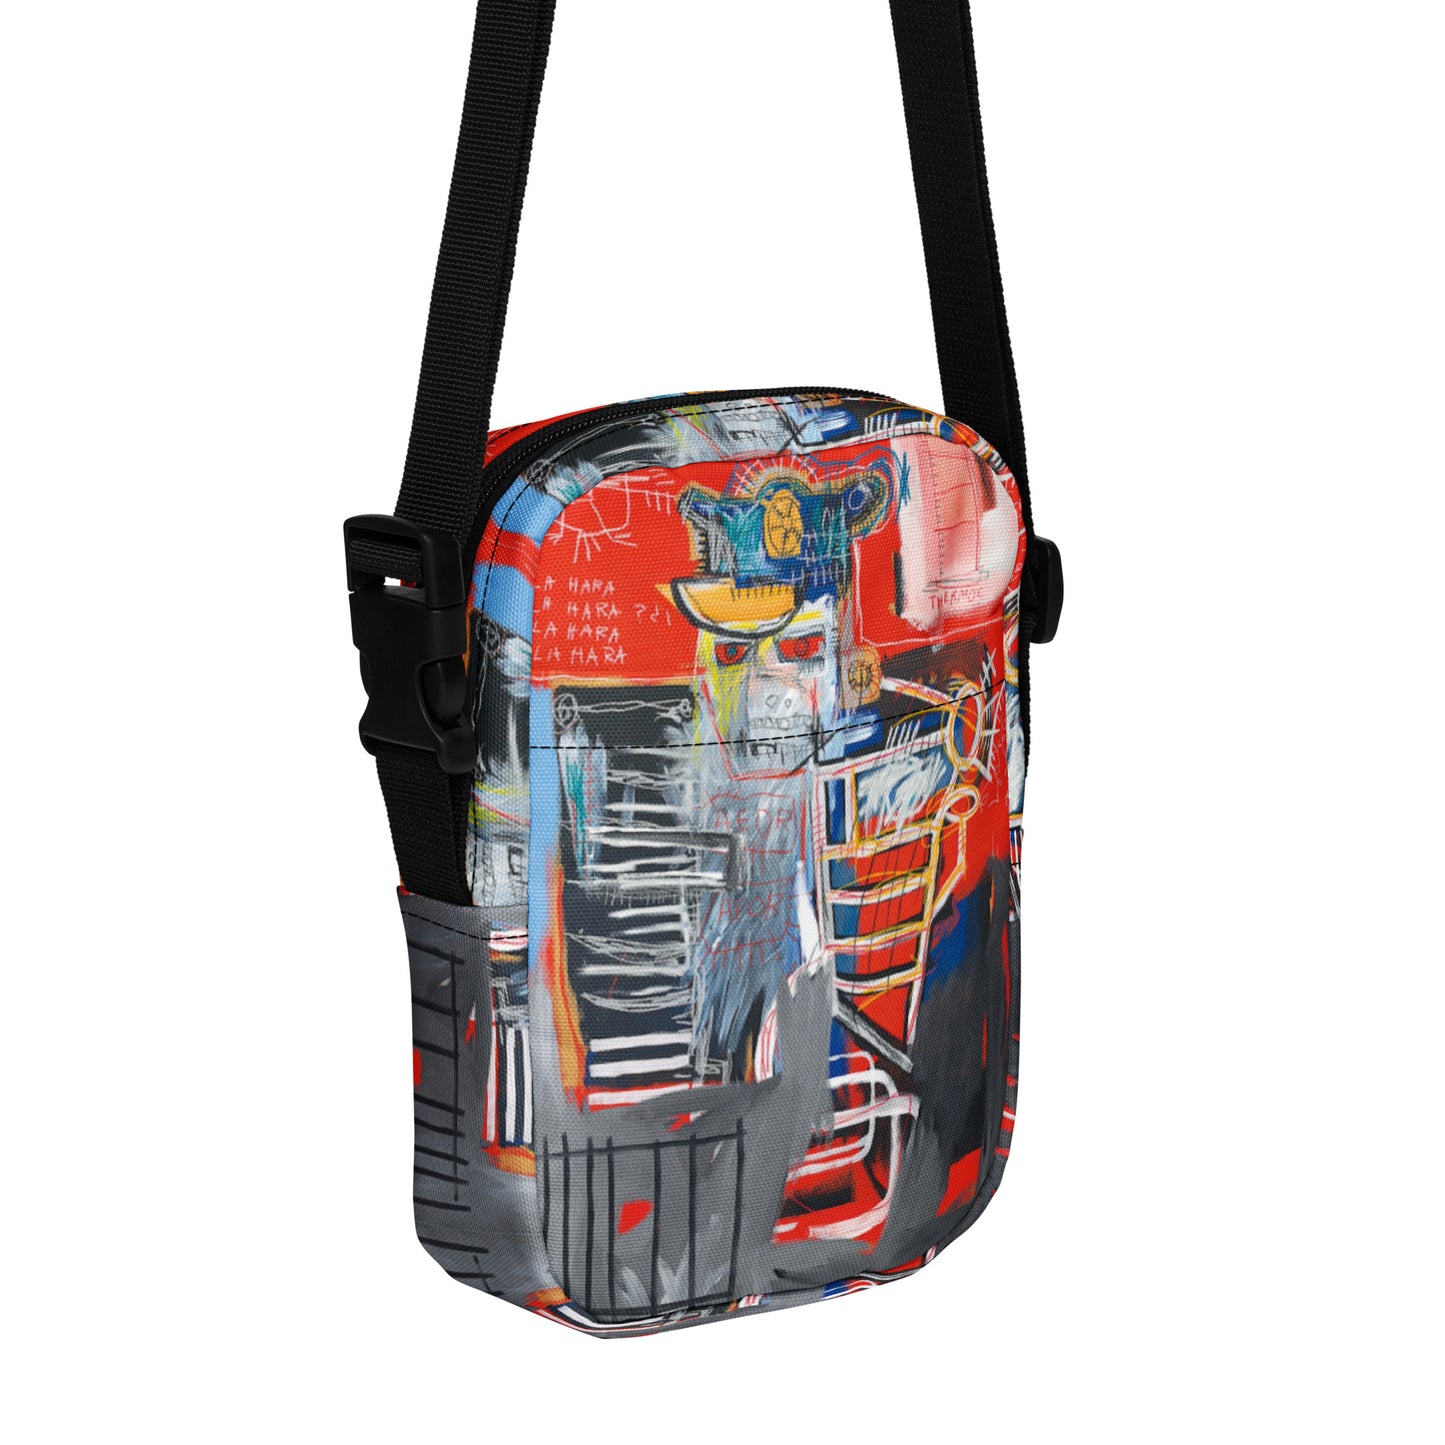 Jean-Michel Basquiat "La Hara" Artwork Bag